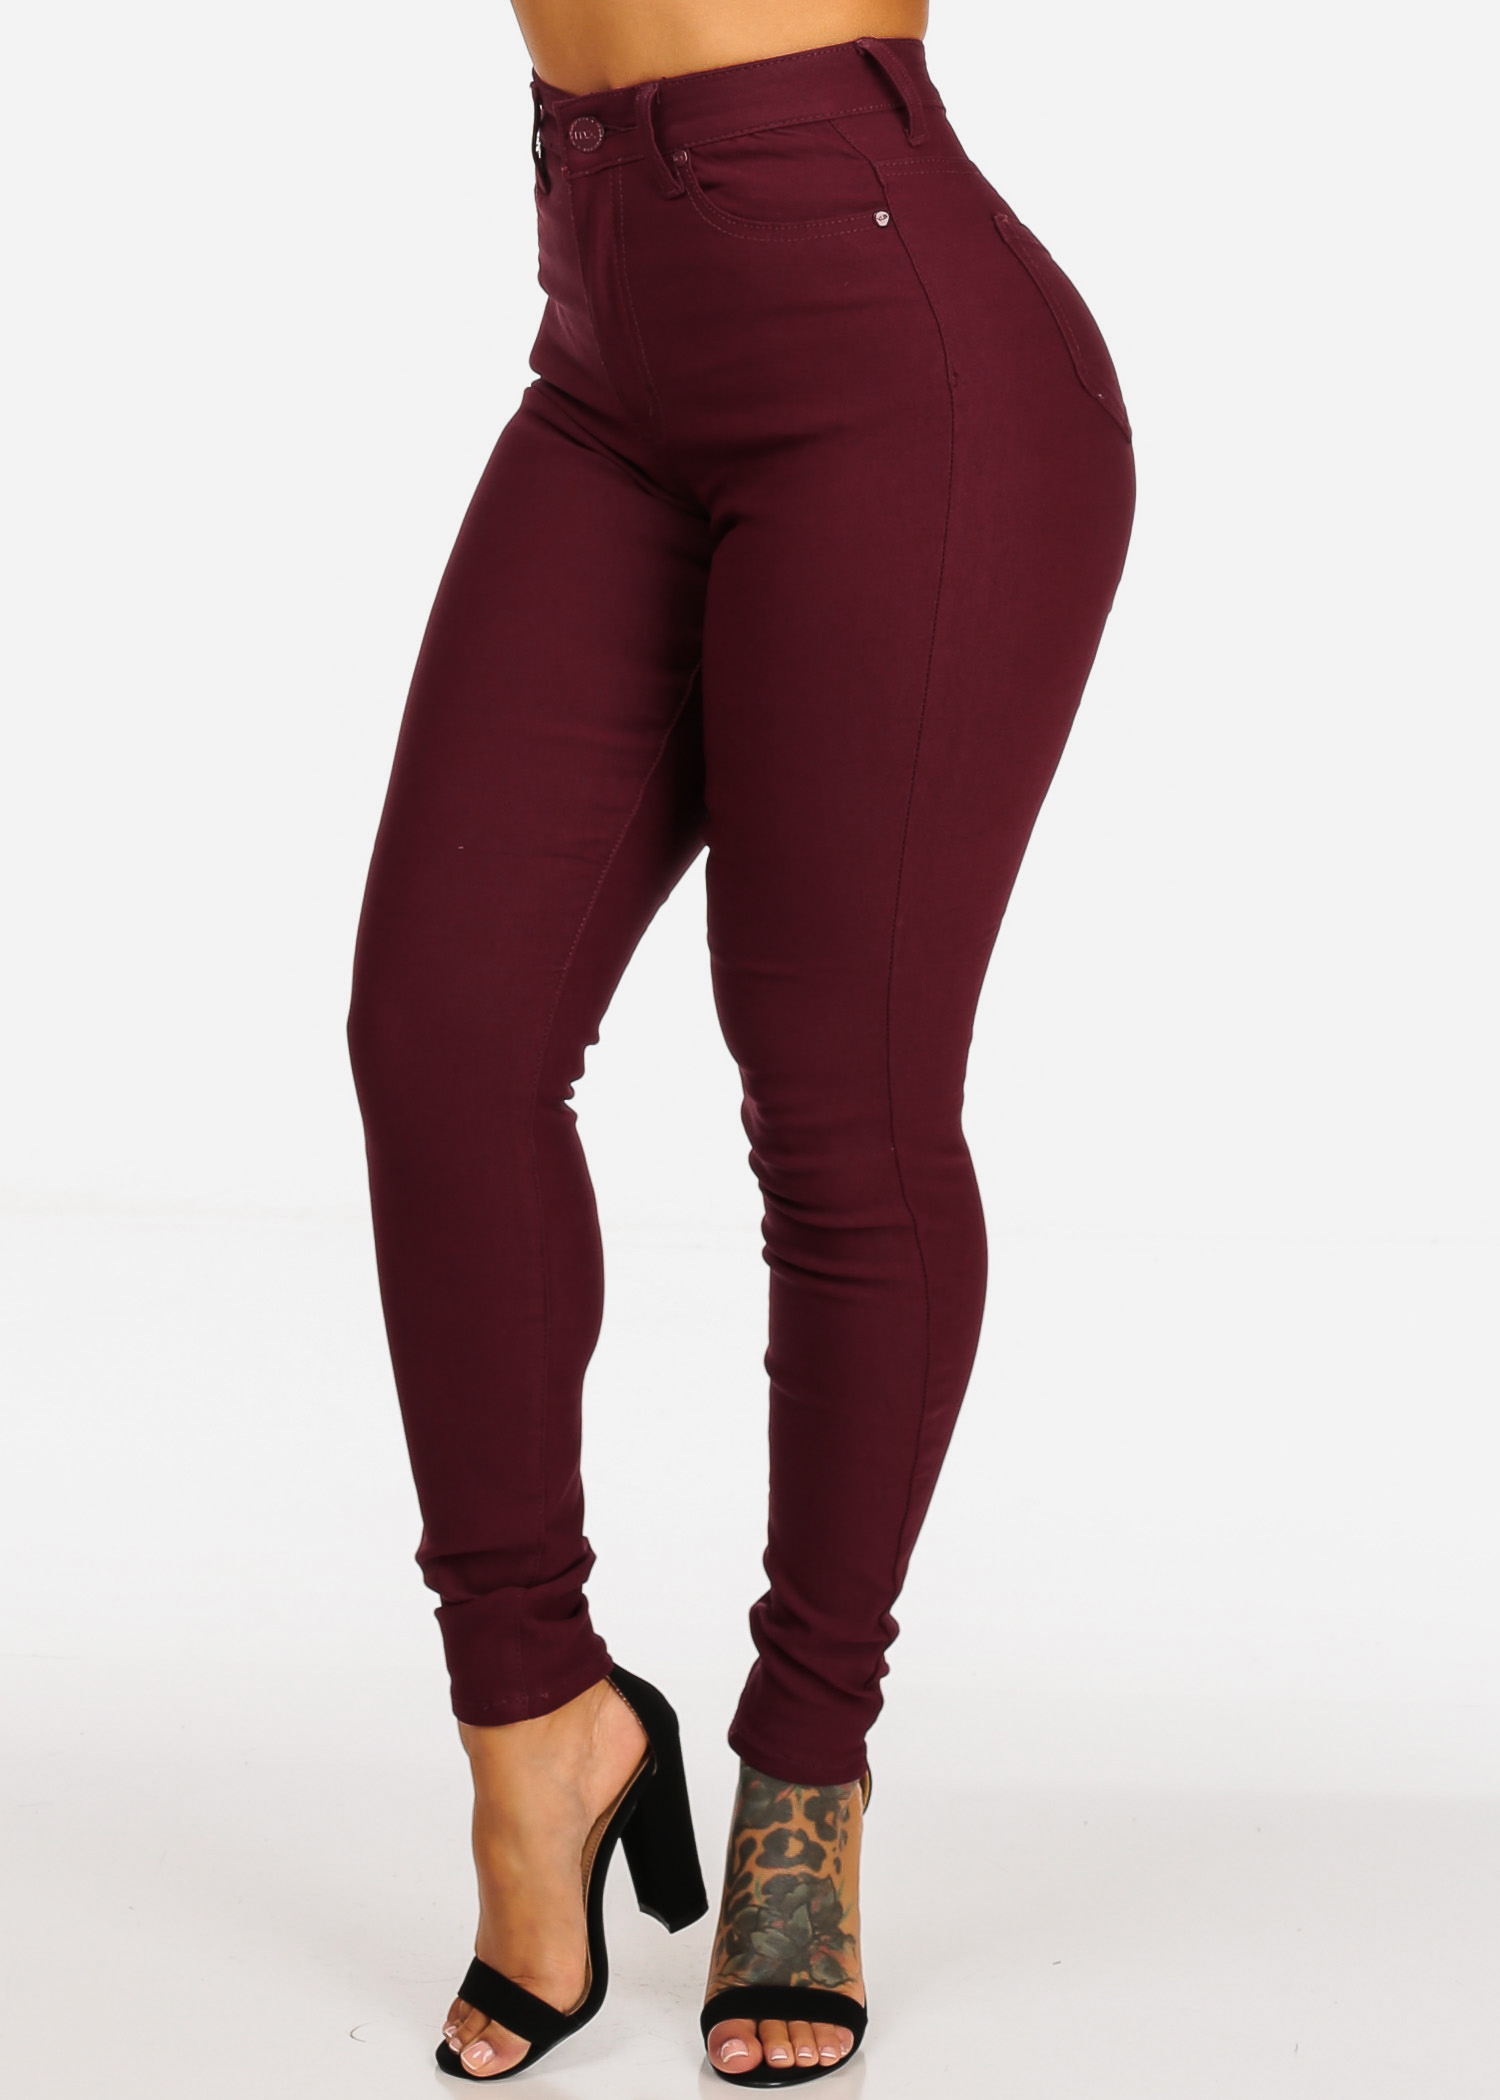 burgundy skinny jeans womens